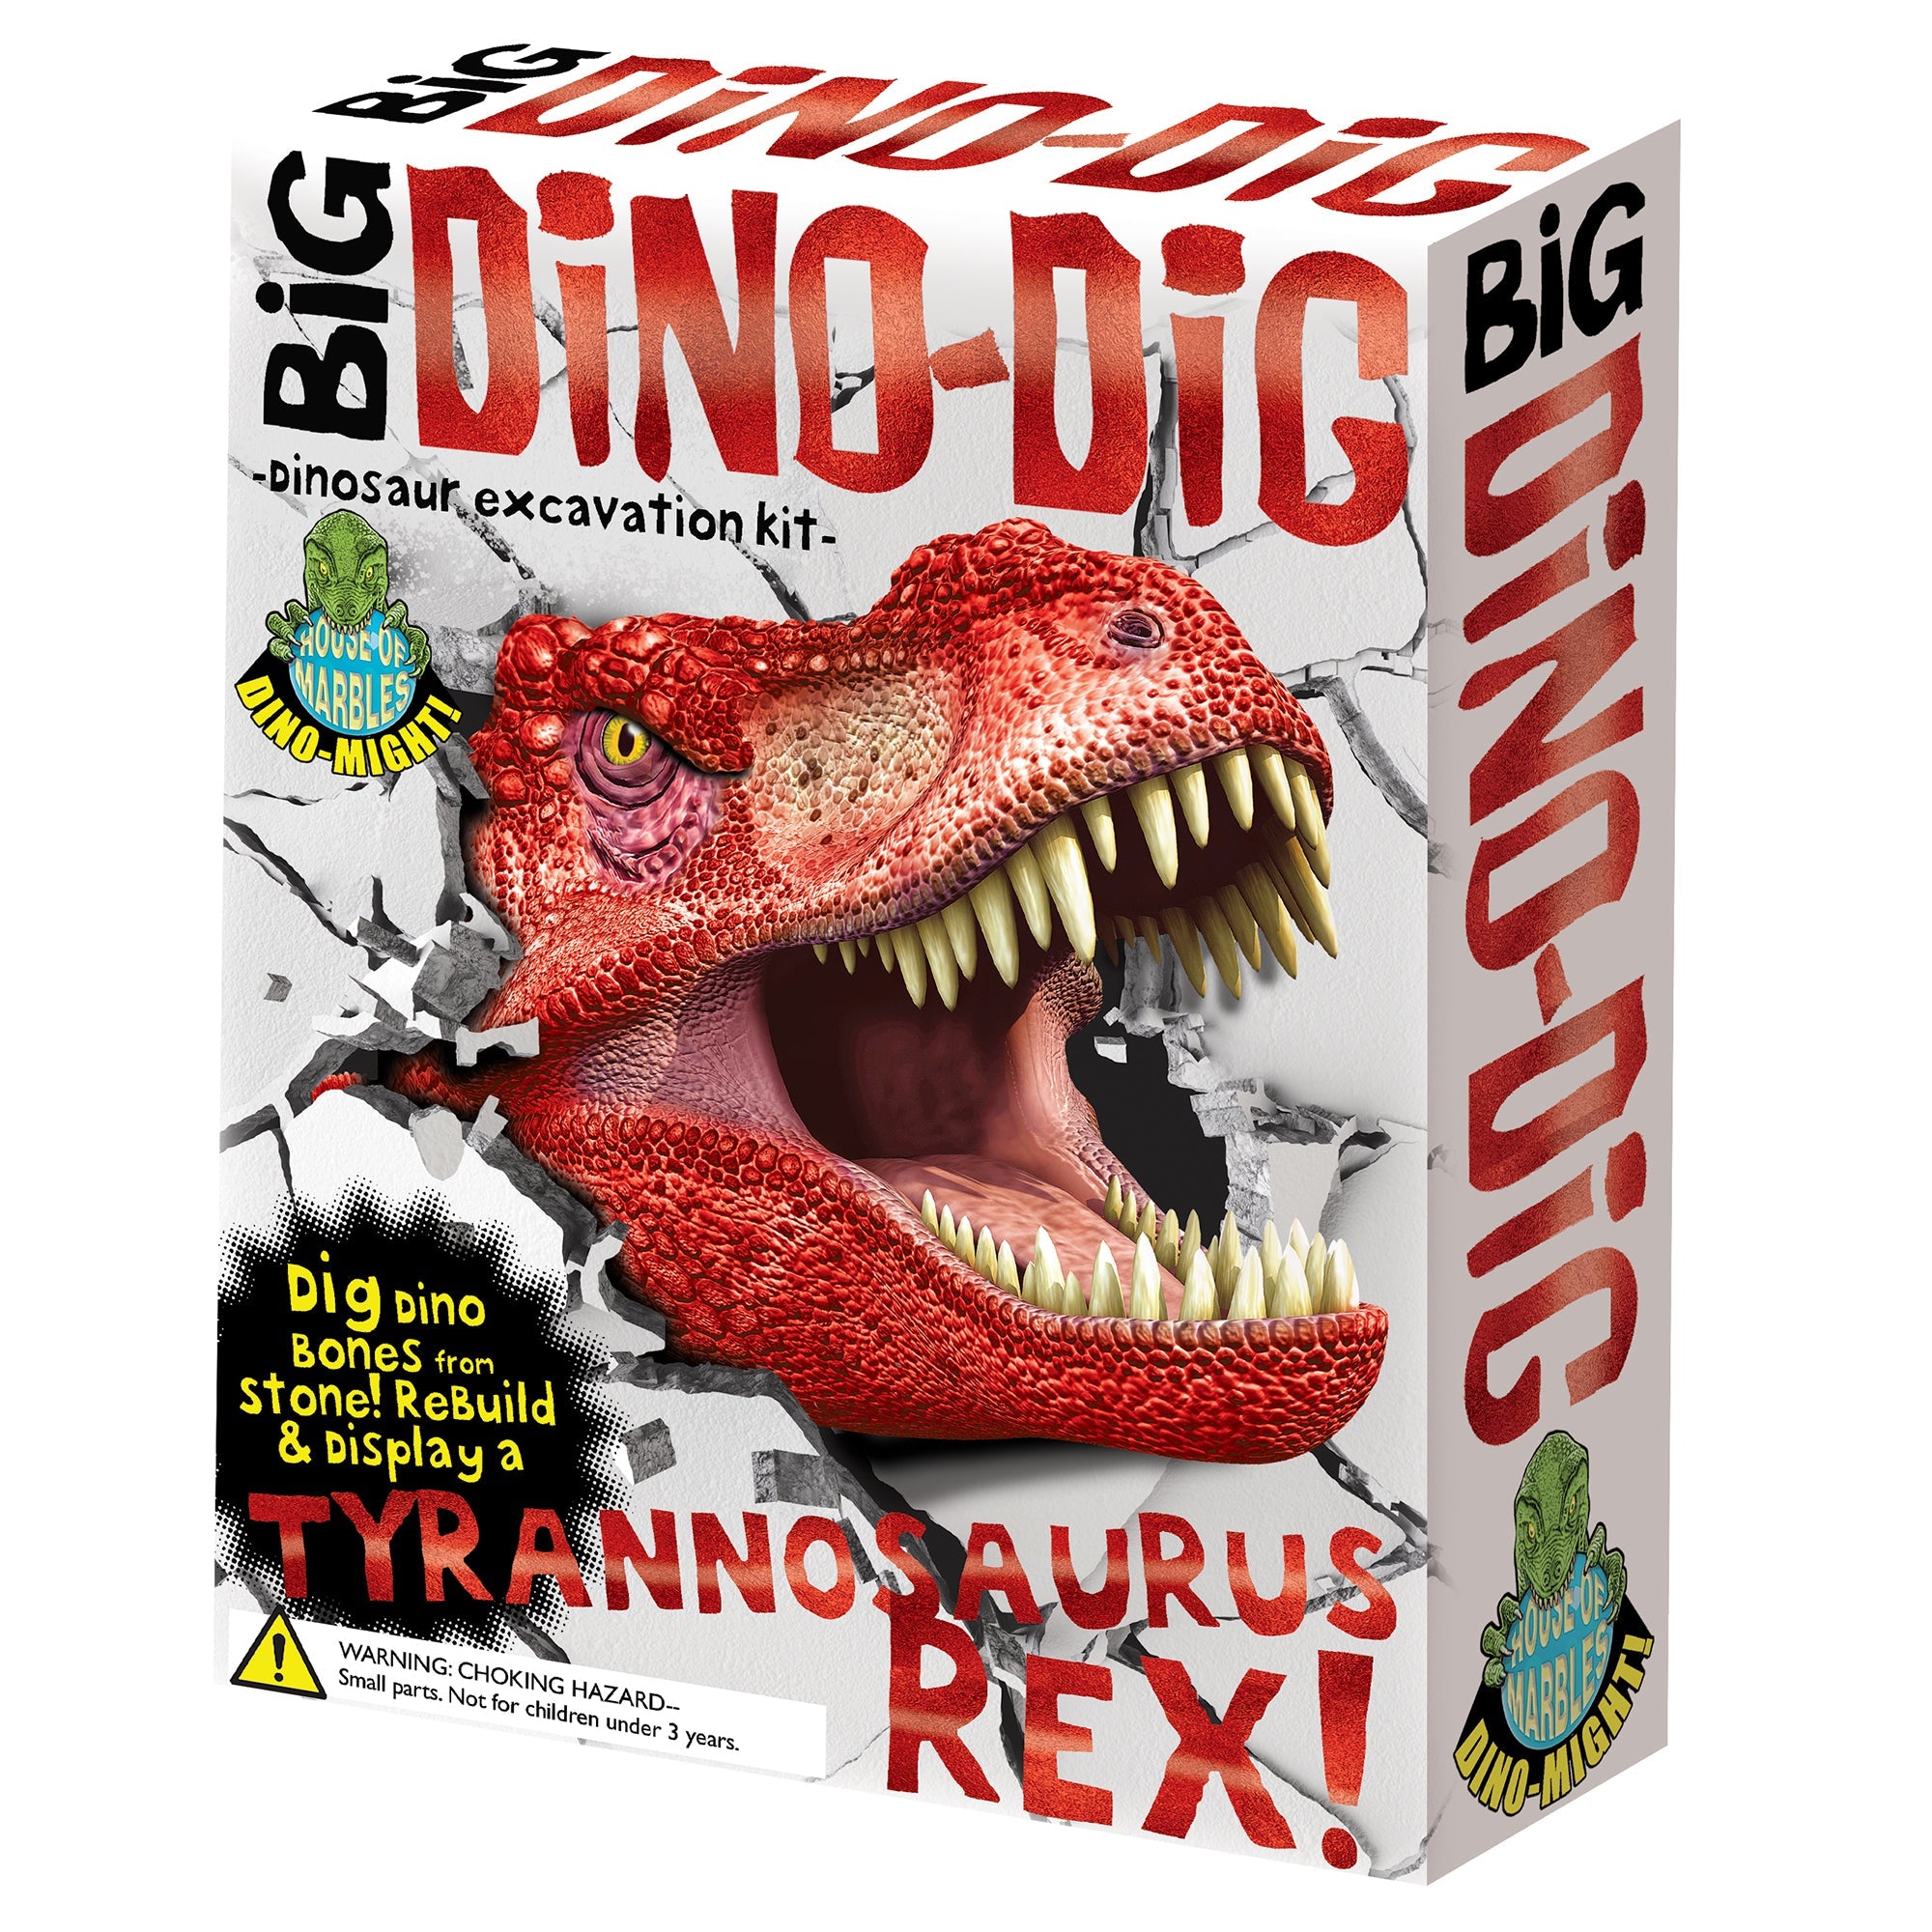 Dig Discovery Tyrannosaurus Rex